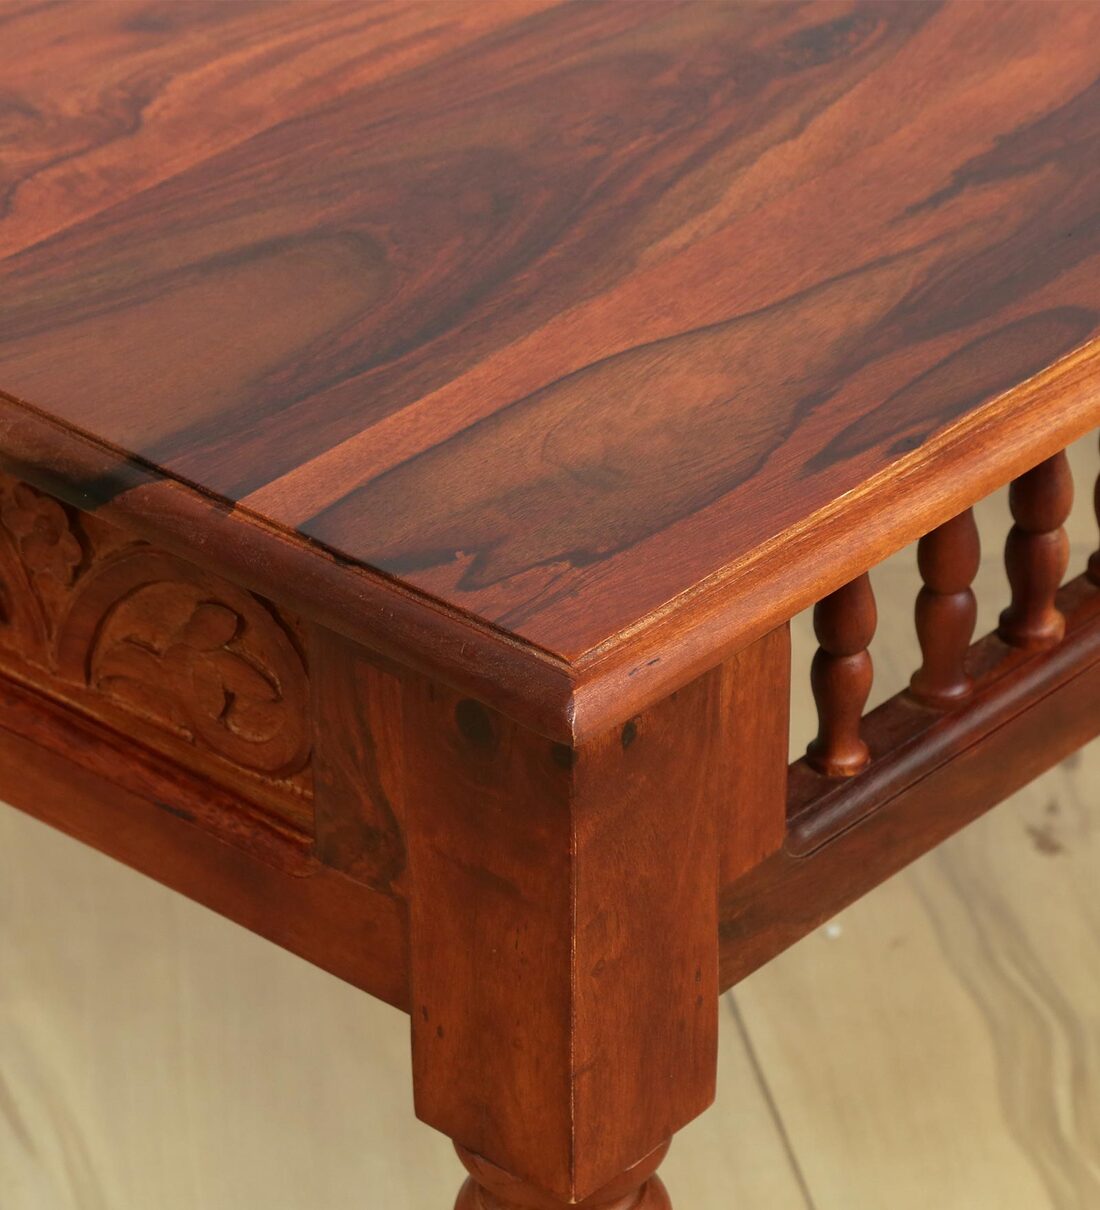 Deventi Solid Wood Coffee Table for Living Room In Honey Oak Finish - Rajwada Furnish